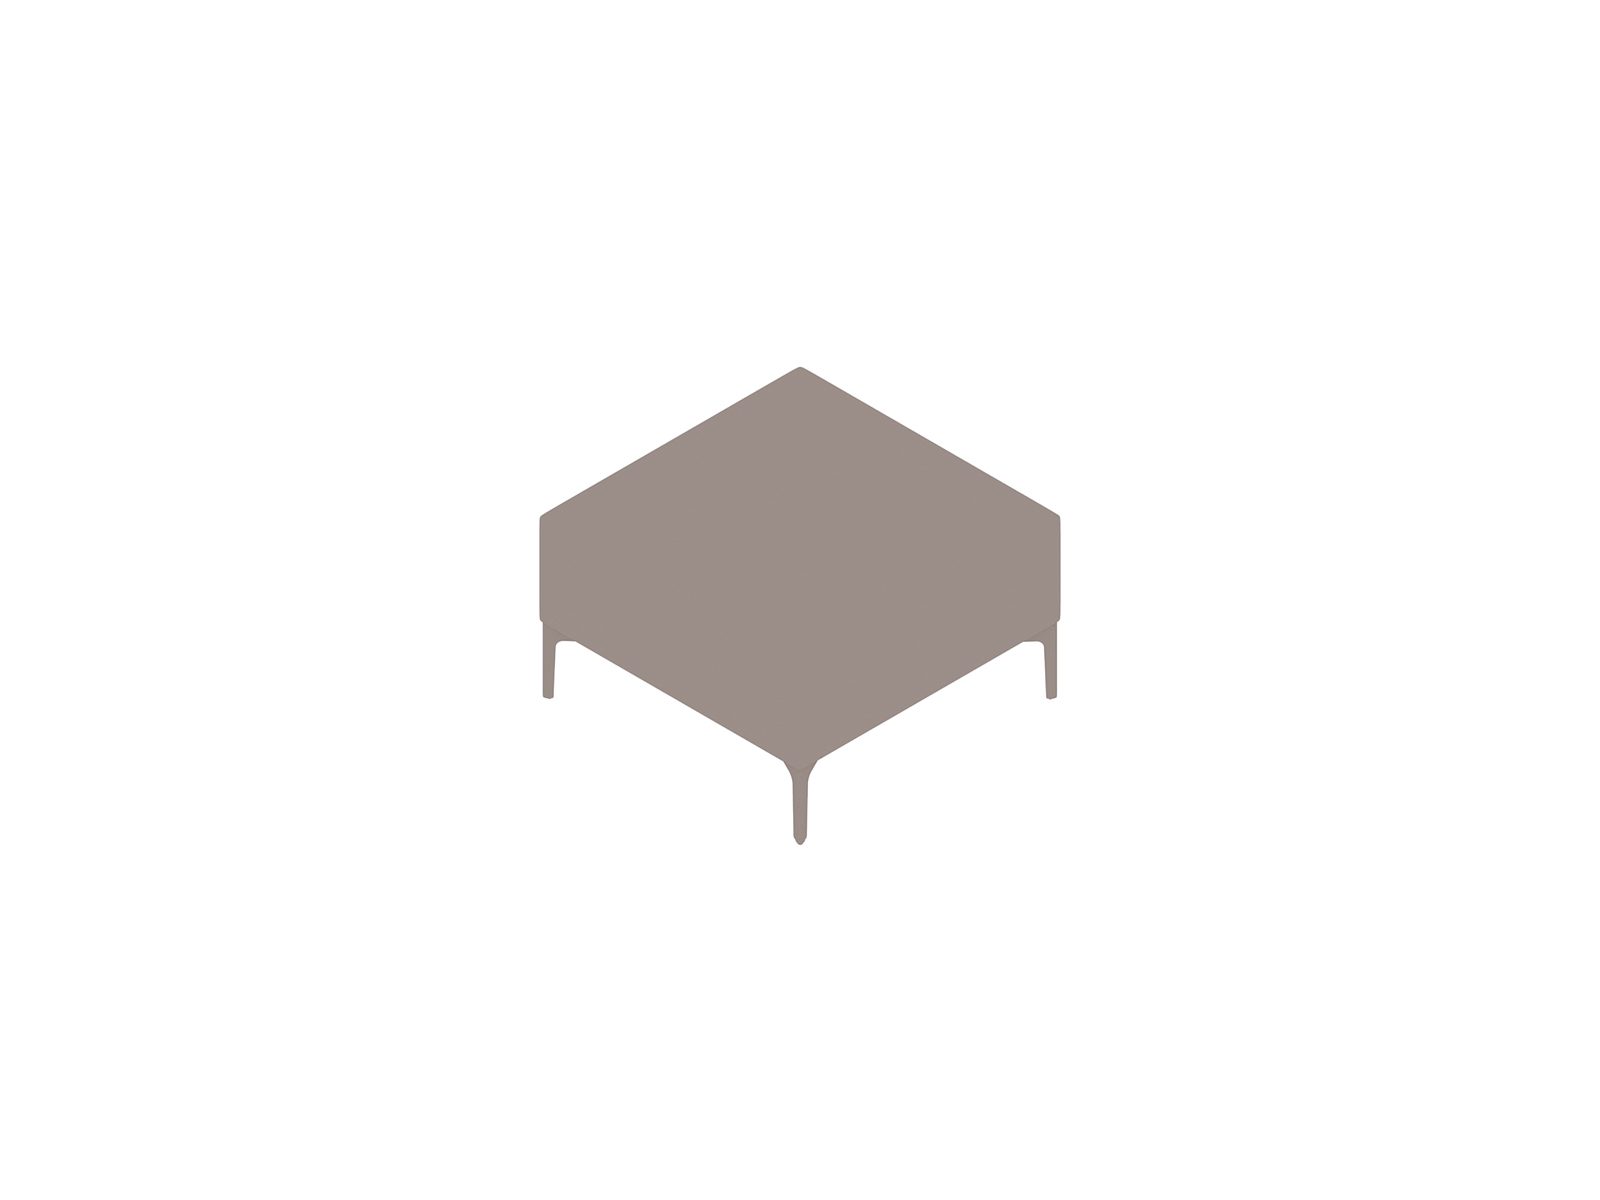 Un rendering generico - Seduta modulare Symbol–Sgabello monoposto